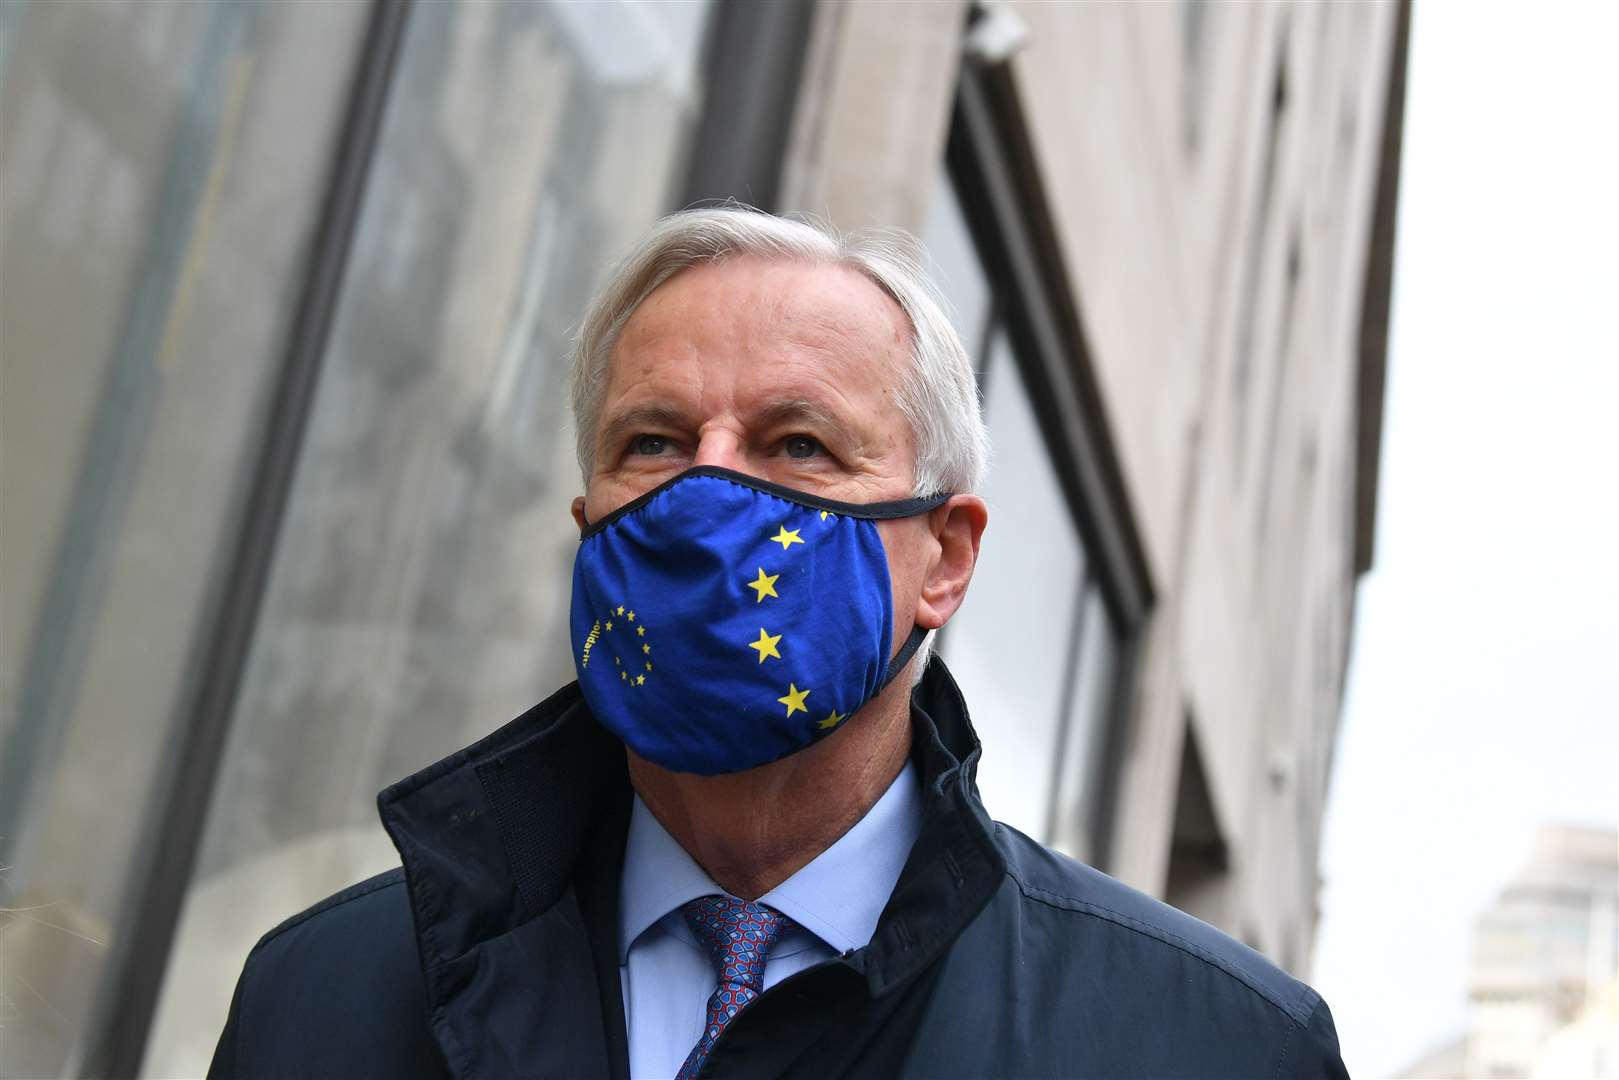 Michel Barnier arriving for talks in London (Dominic Lipinski/PA)